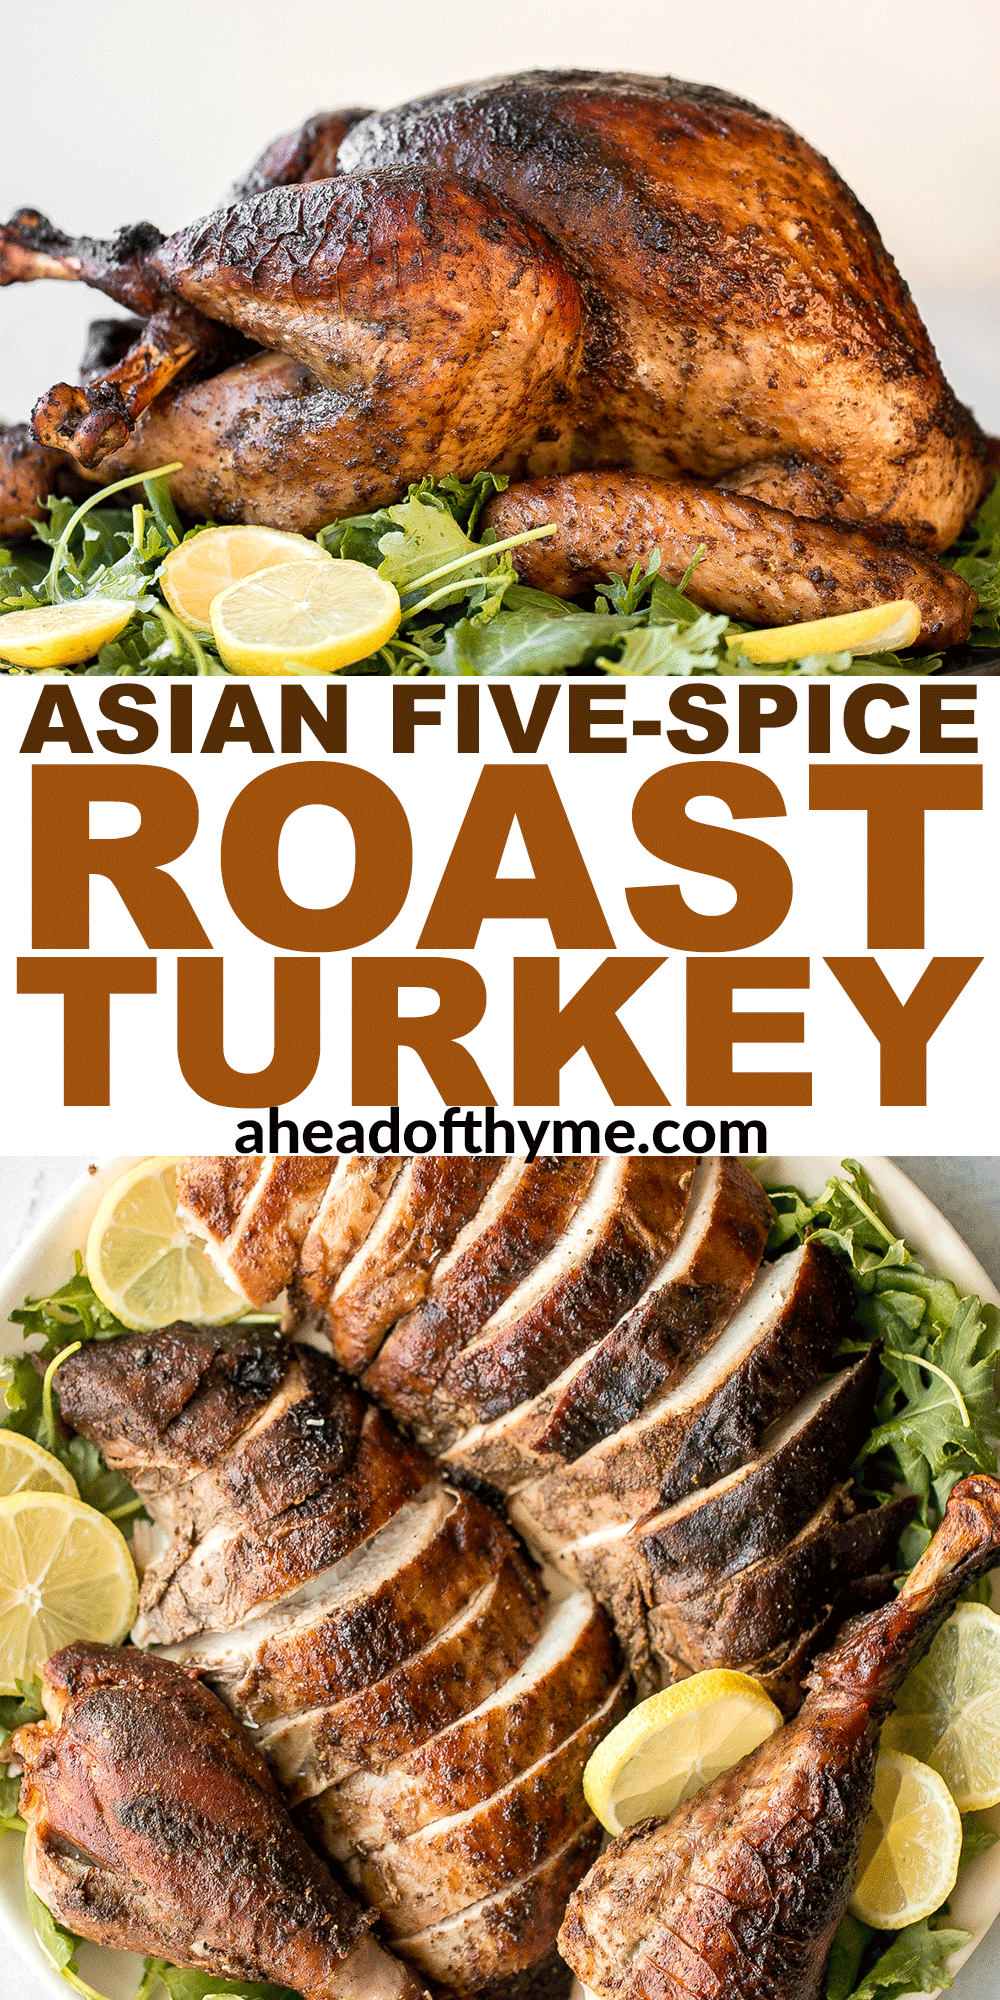 Asian Five-Spice Roast Turkey